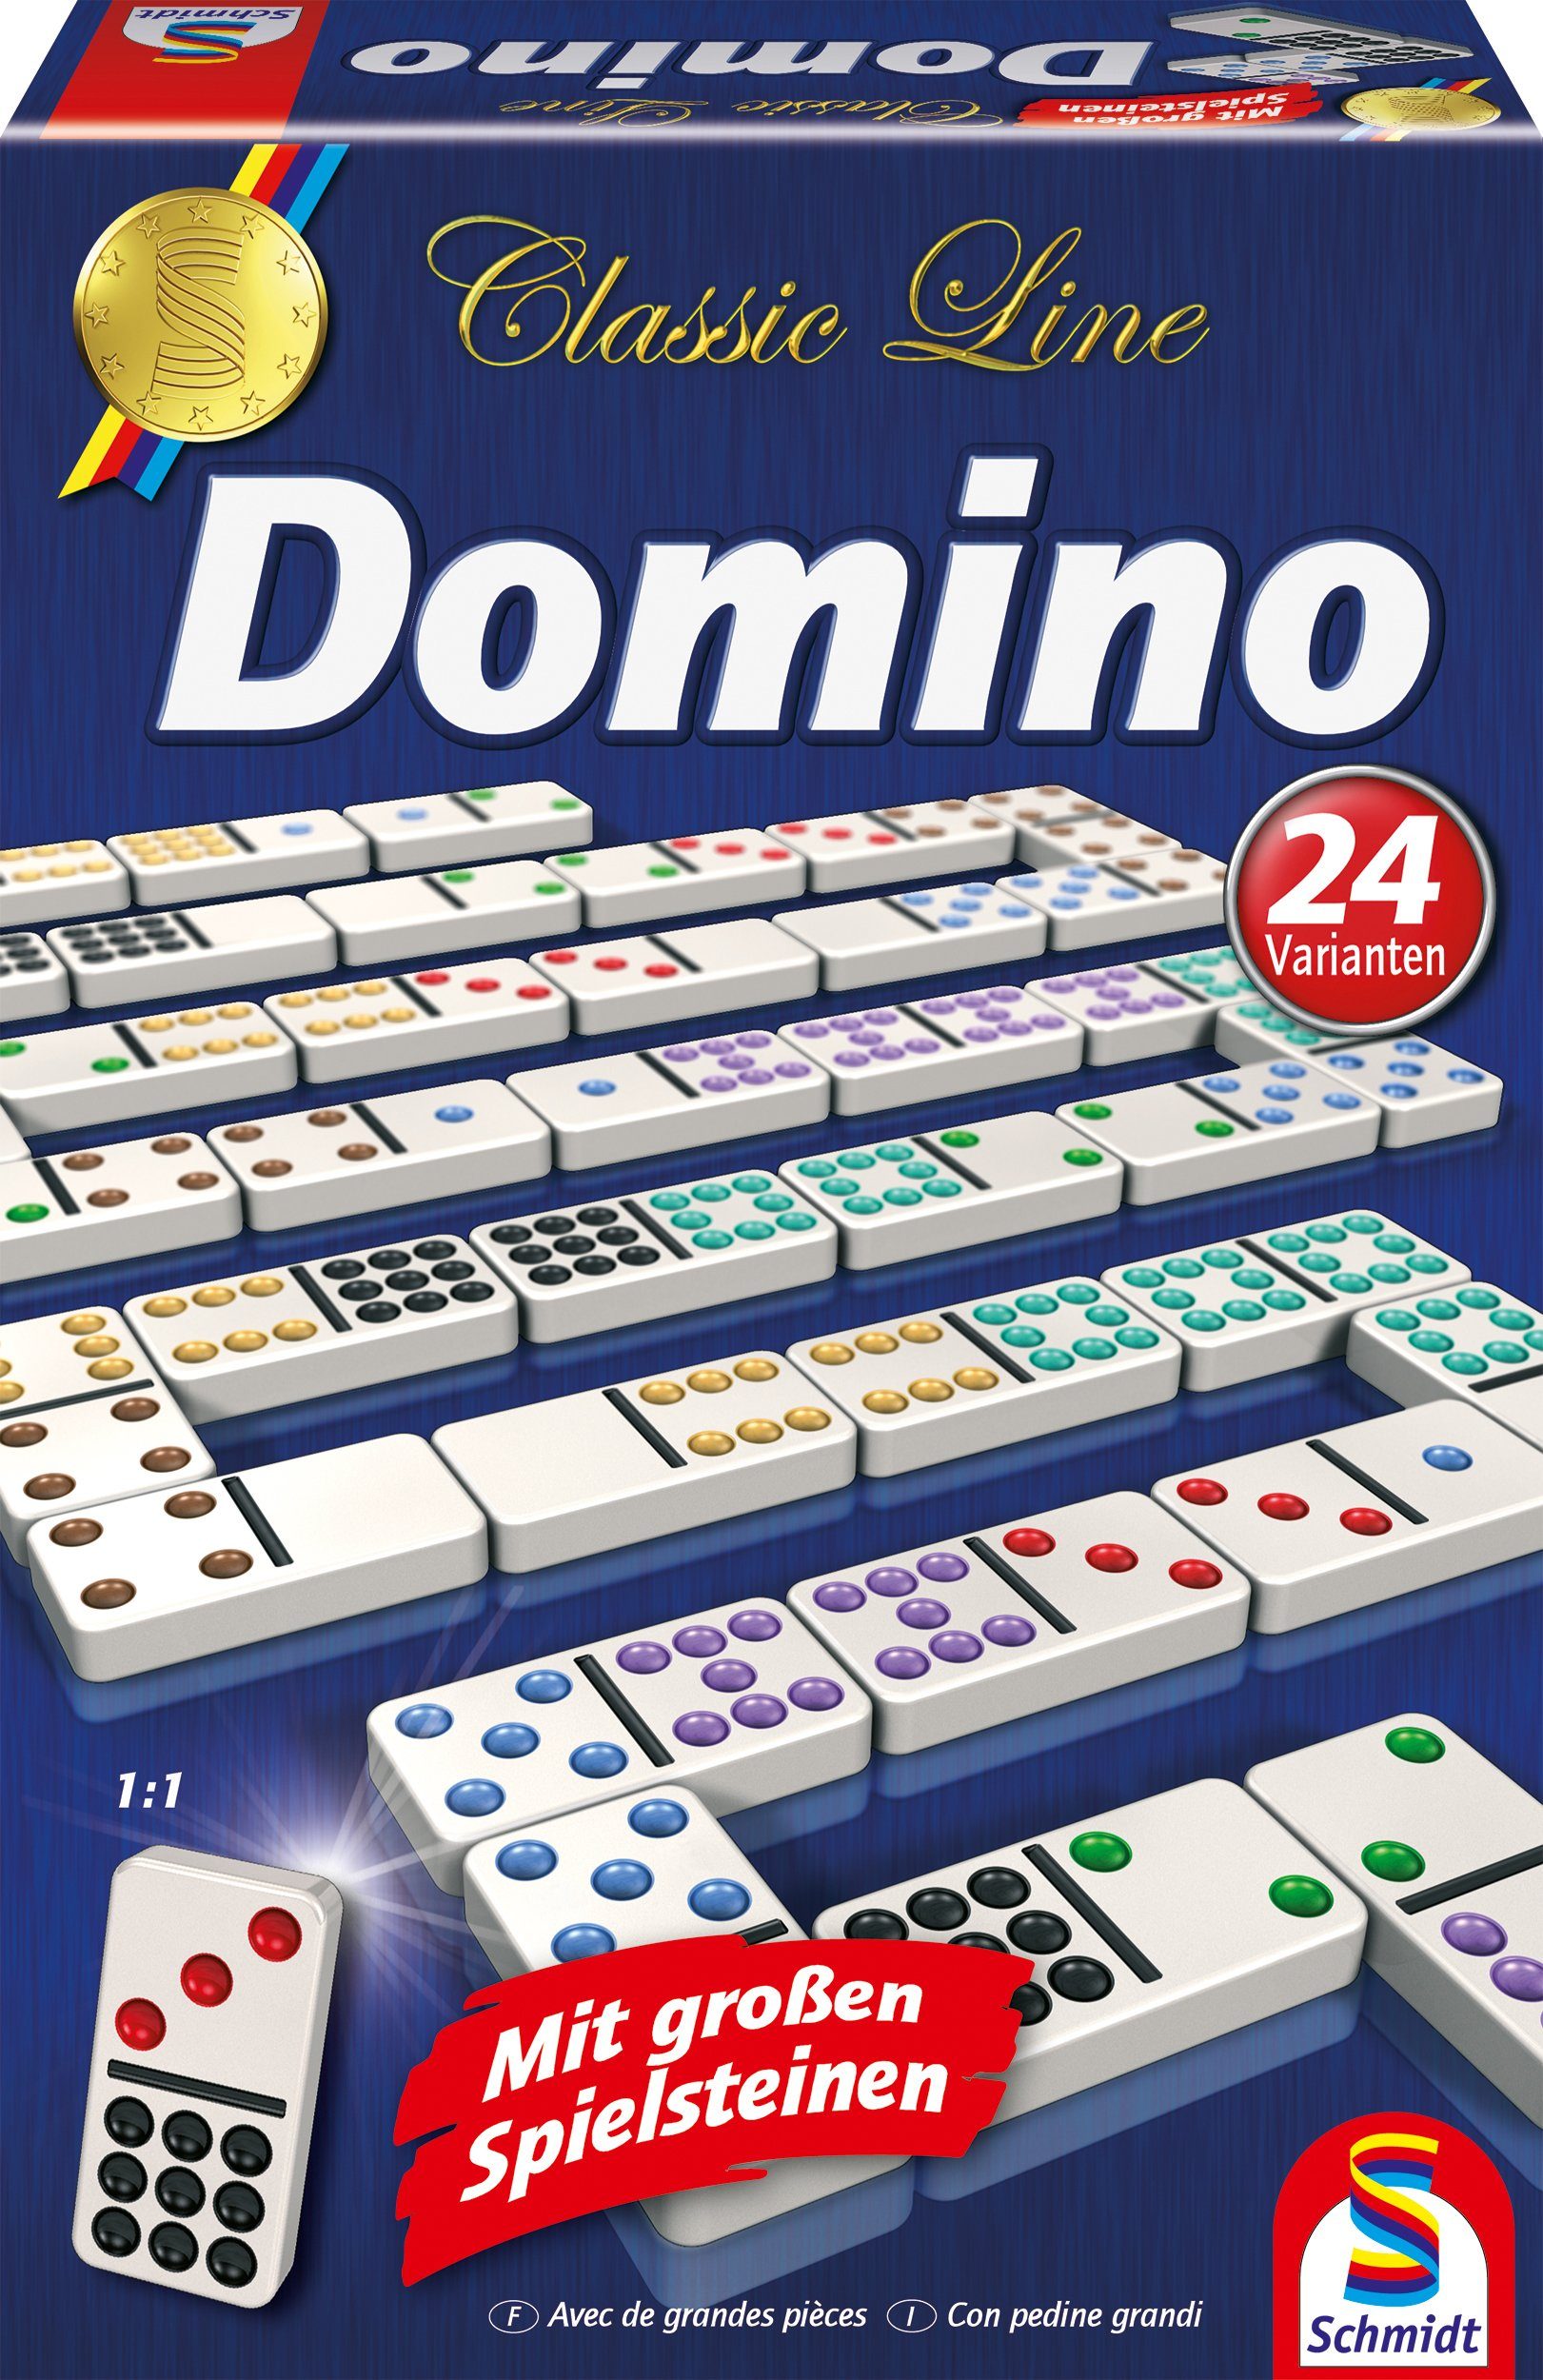 Schmidt Ігри Spiel, Classic Line, Domino, mit extra großen Spielsteinen